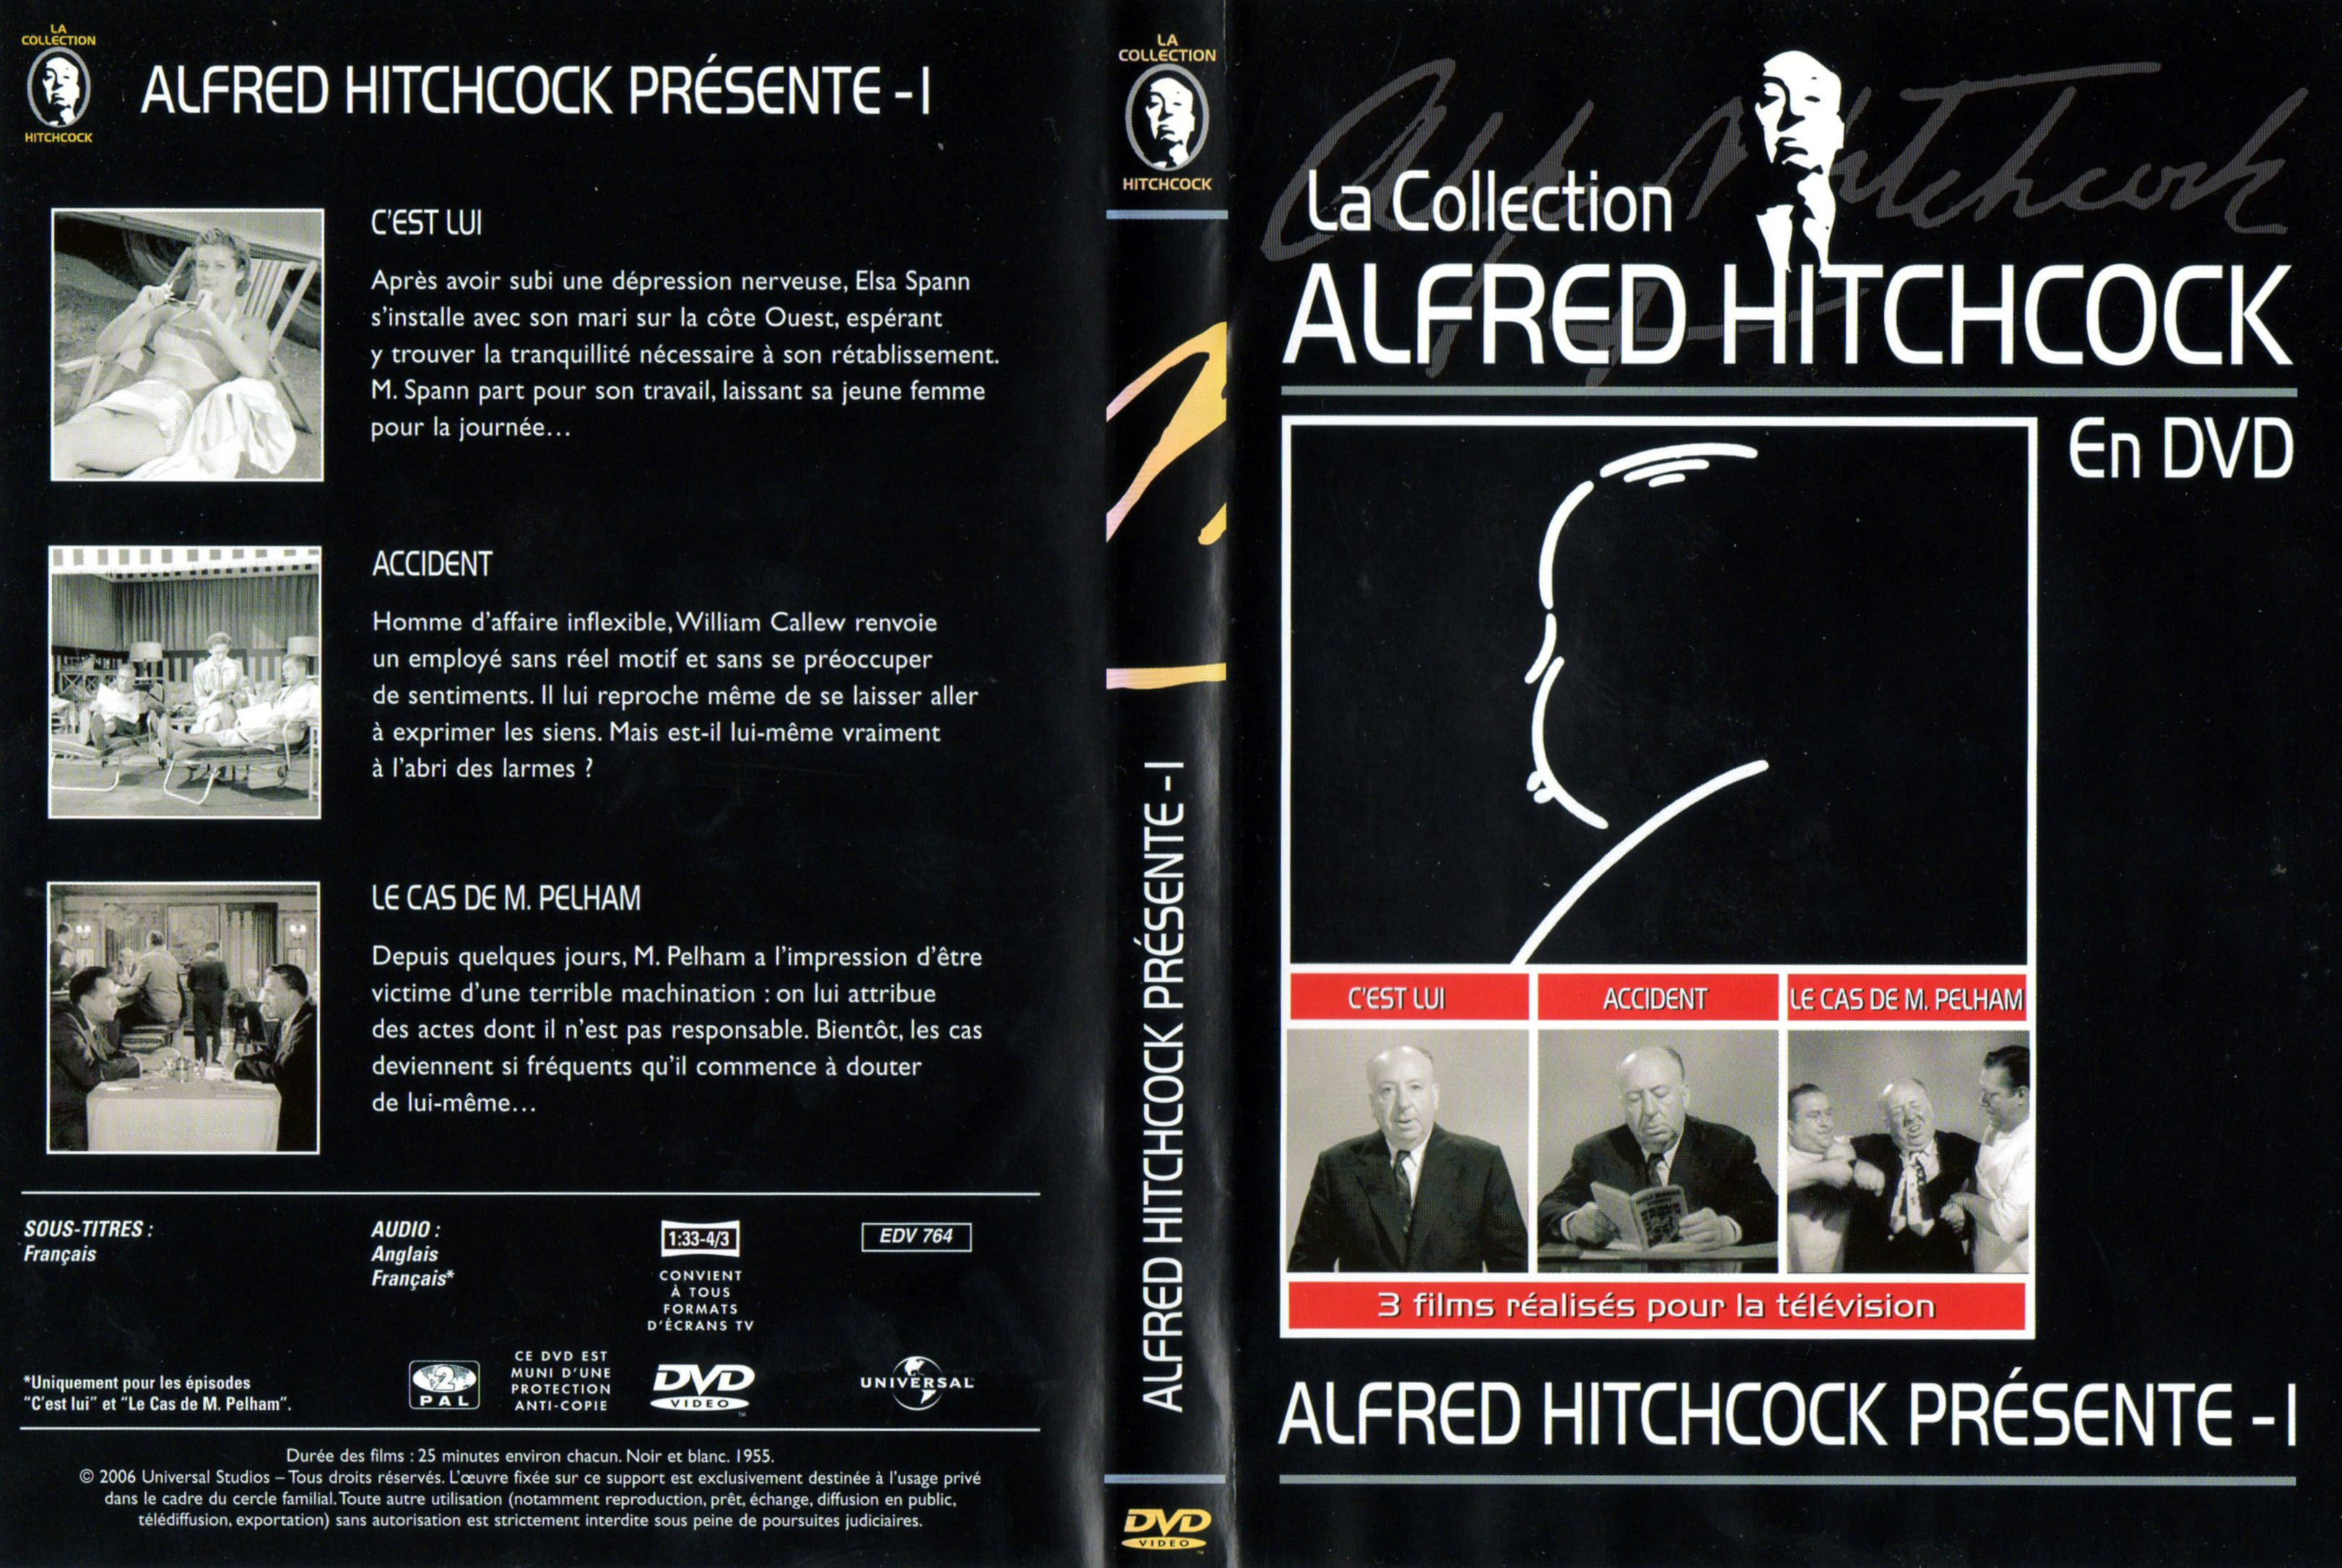 Jaquette DVD Alfred Hitchcock prsente DVD 1